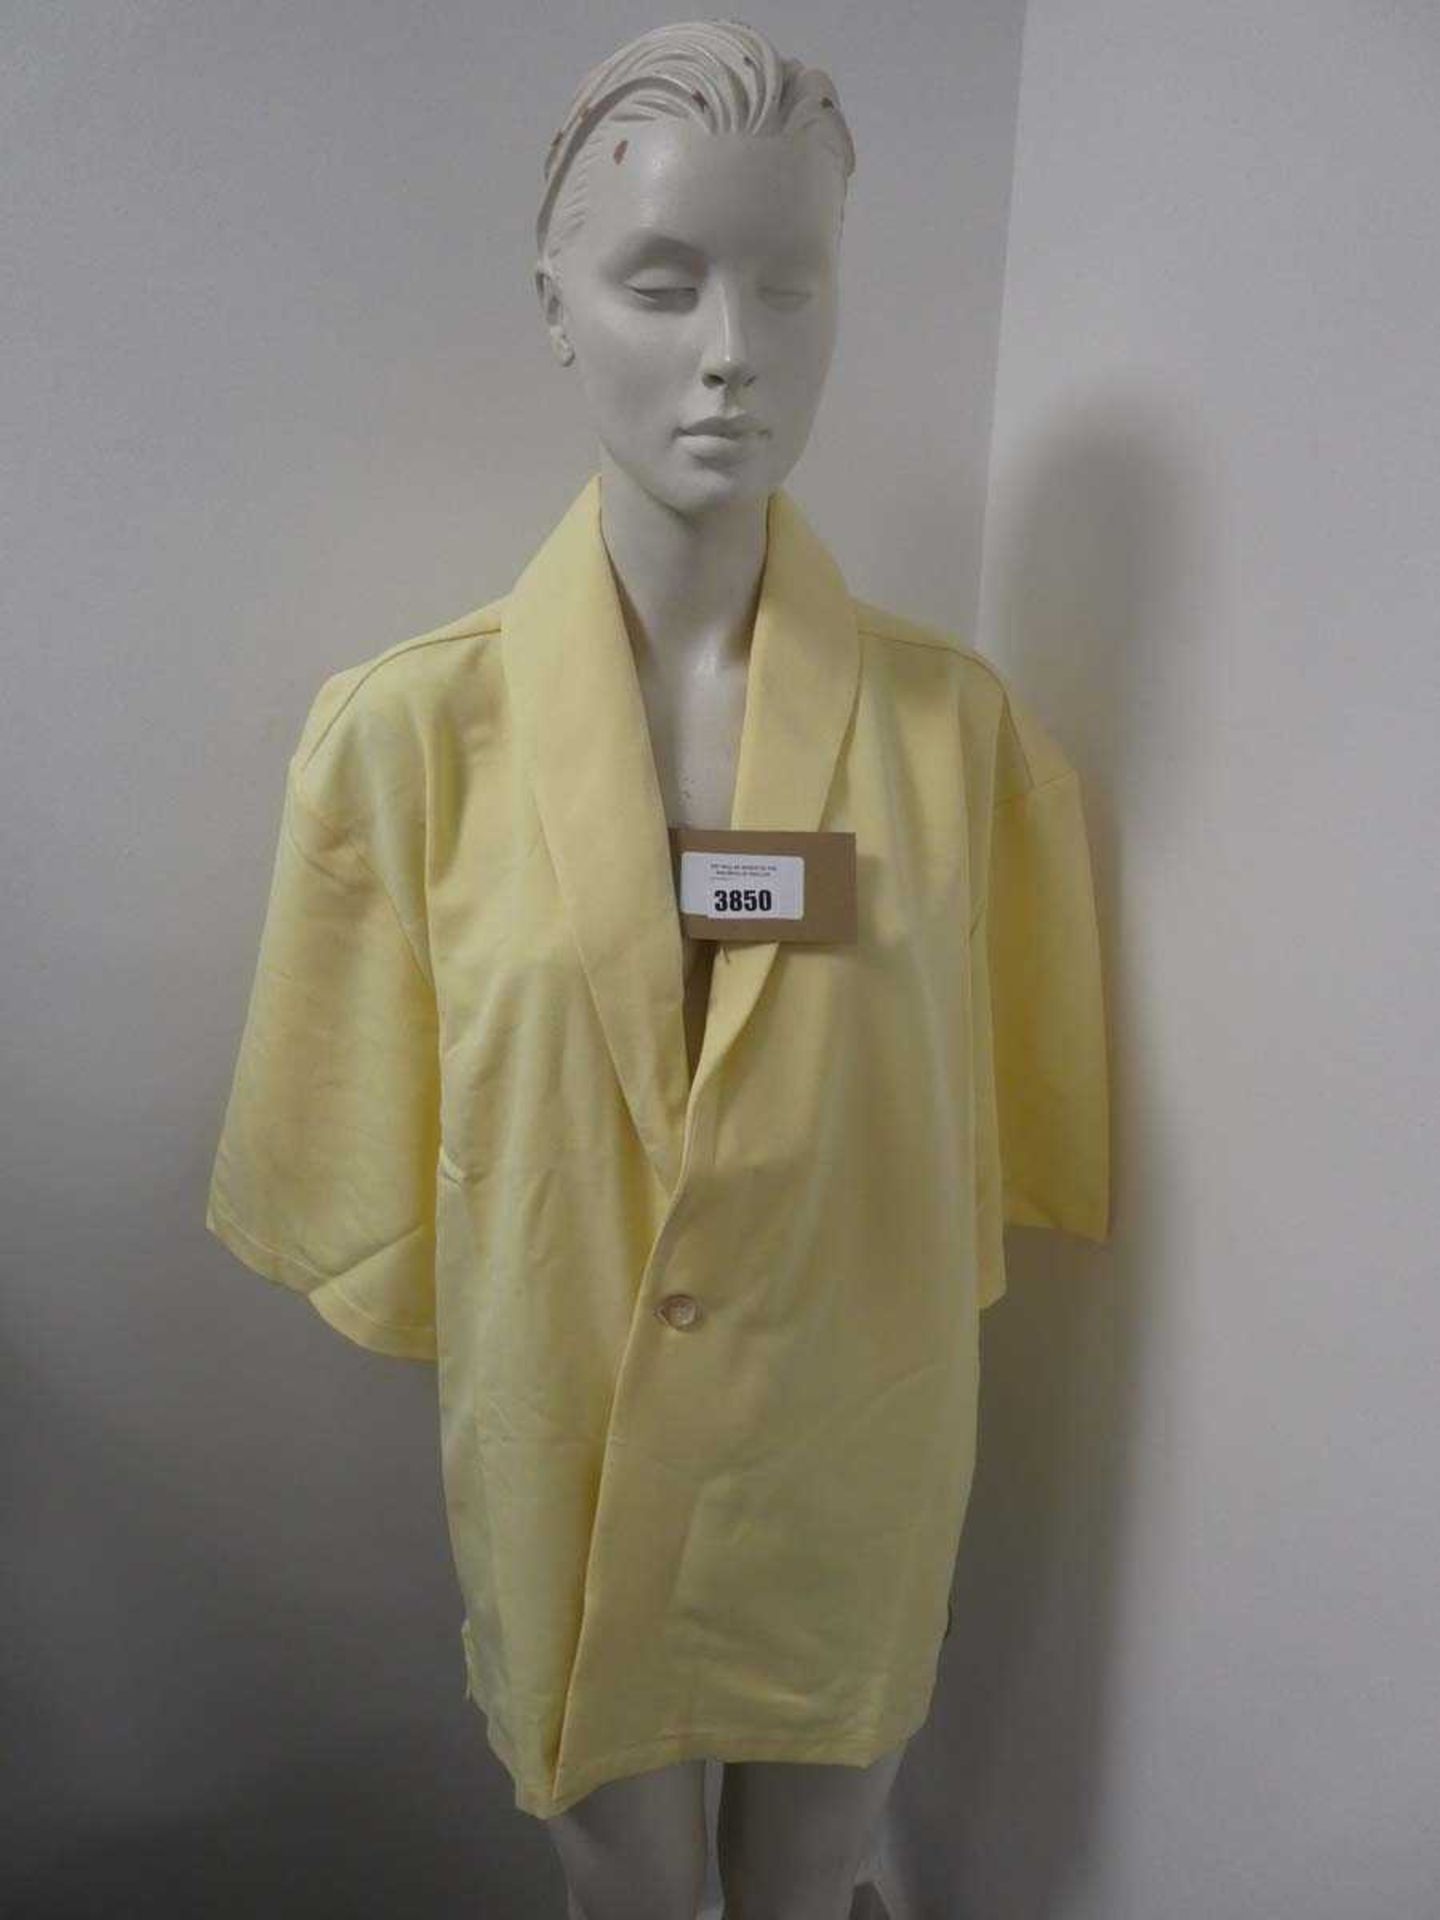 +VAT Prevu vieste shirt in lemon, size XL (hanging)